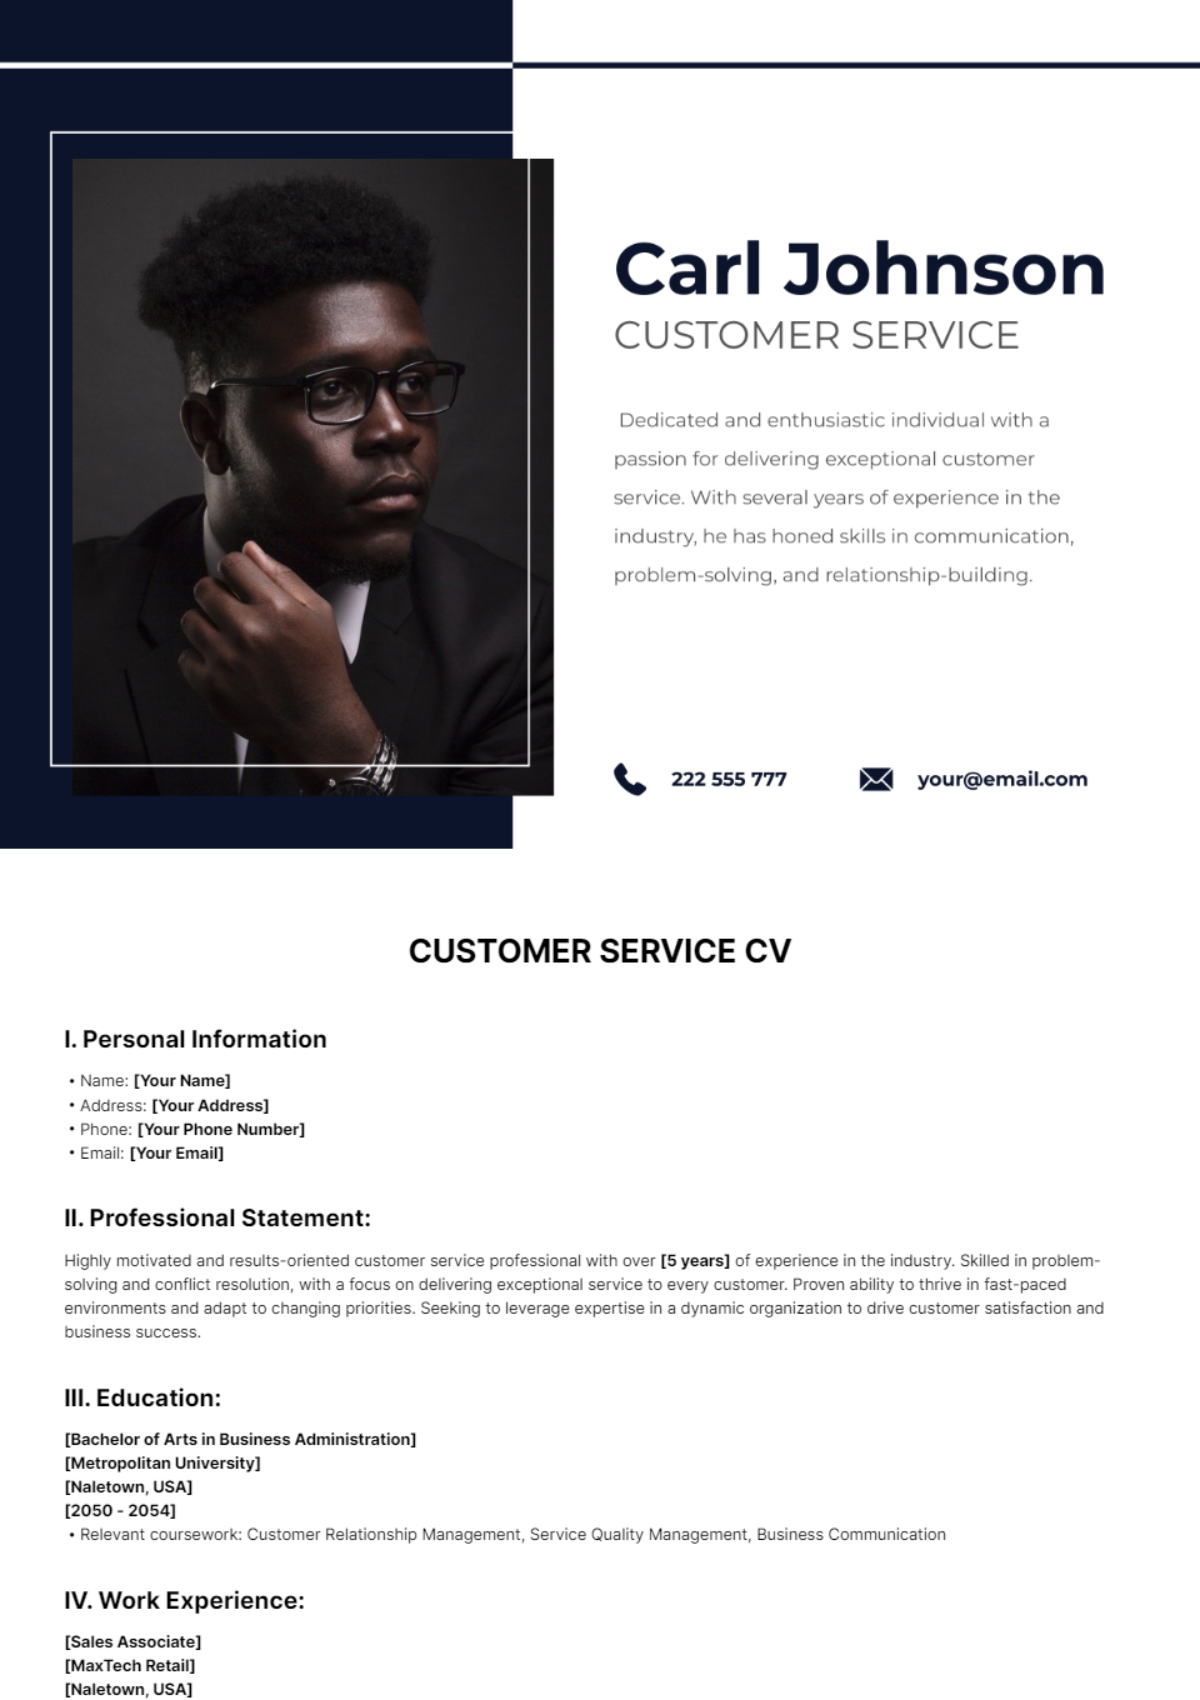 Customer Service CV Template